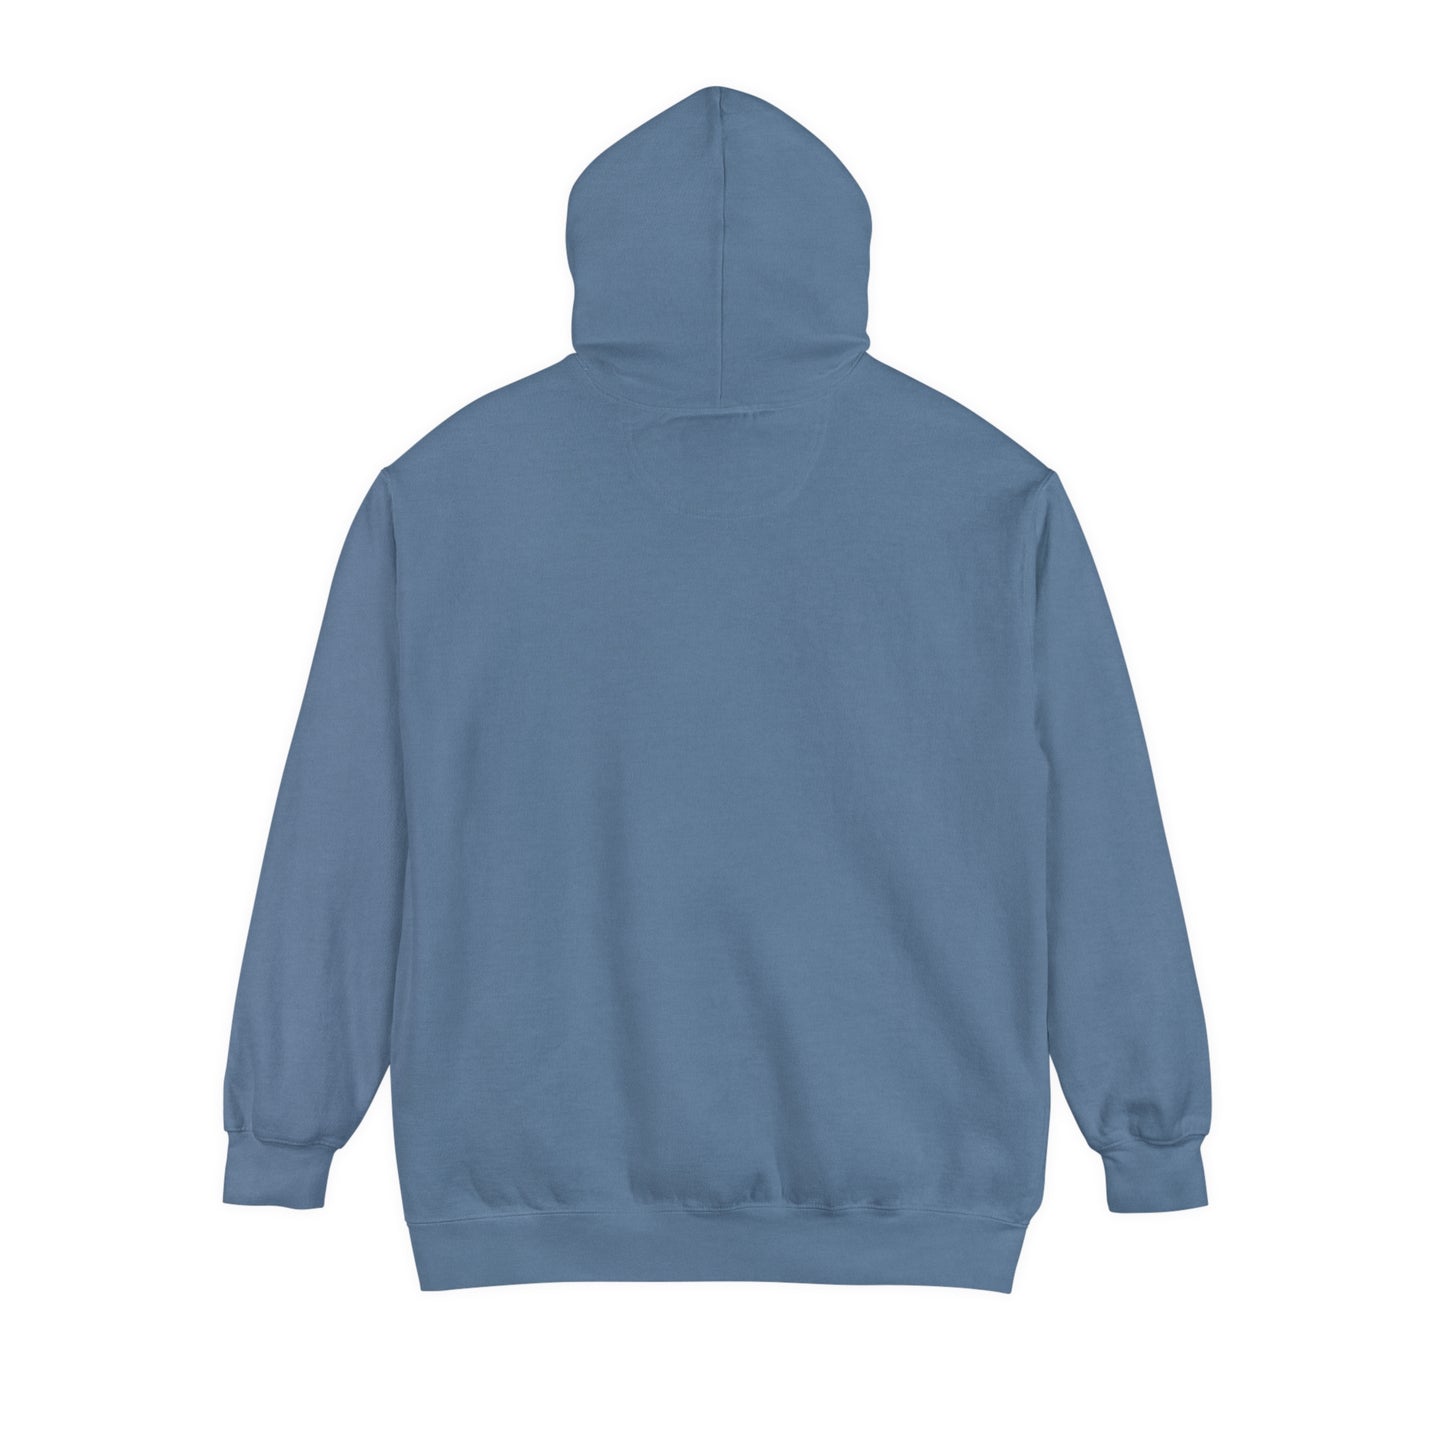 Unisex Garment-Dyed Hoodie